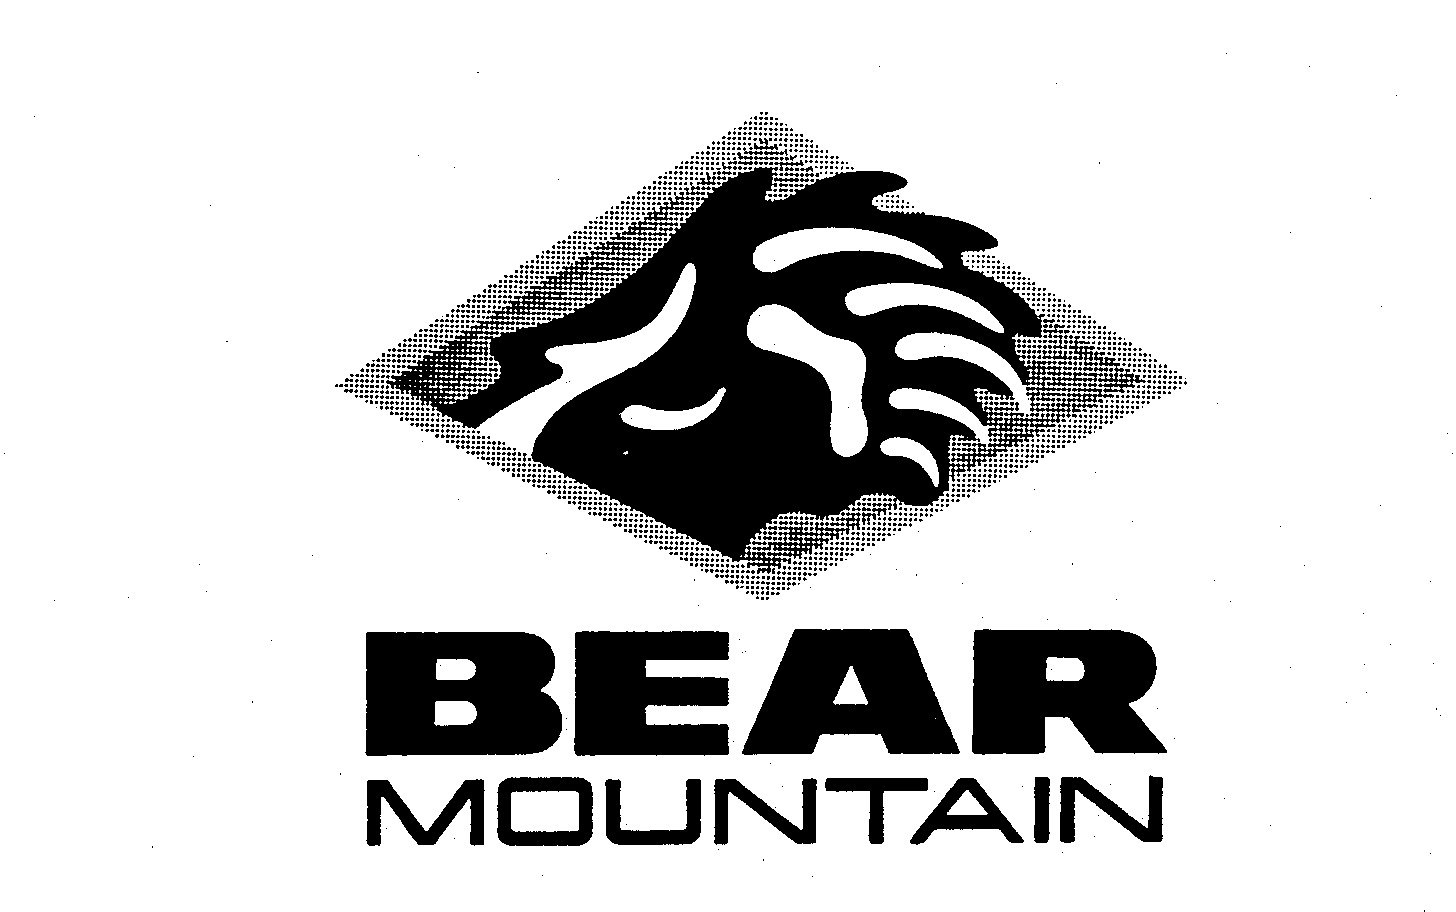 BEAR MOUNTAIN